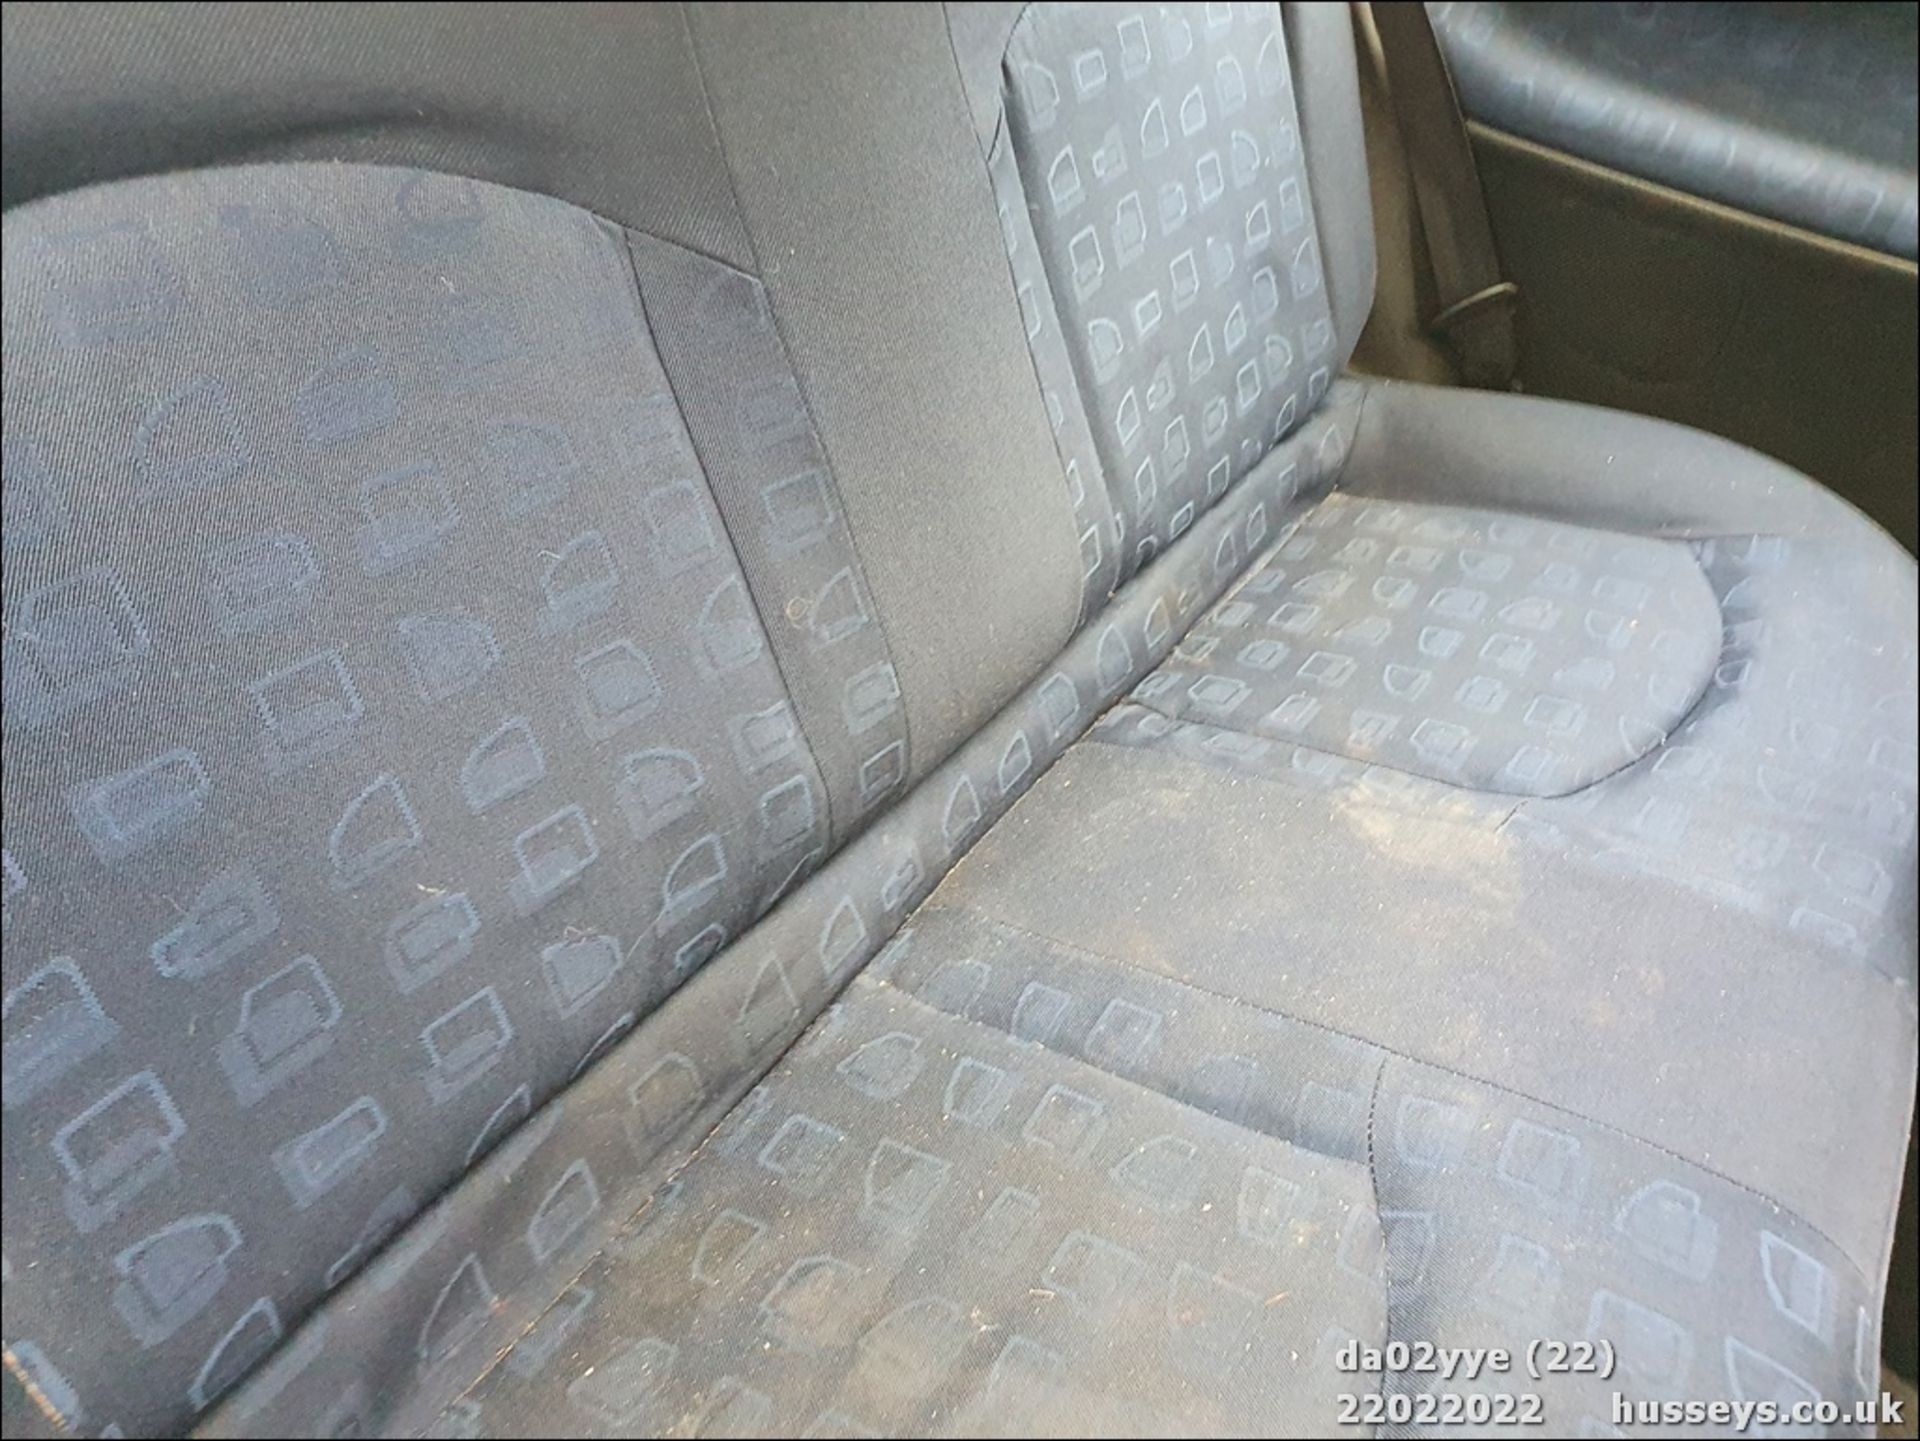 02/02 PEUGEOT 206 STYLE HDI - 1398cc 3dr Hatchback (Blue, 103k) - Image 22 of 38